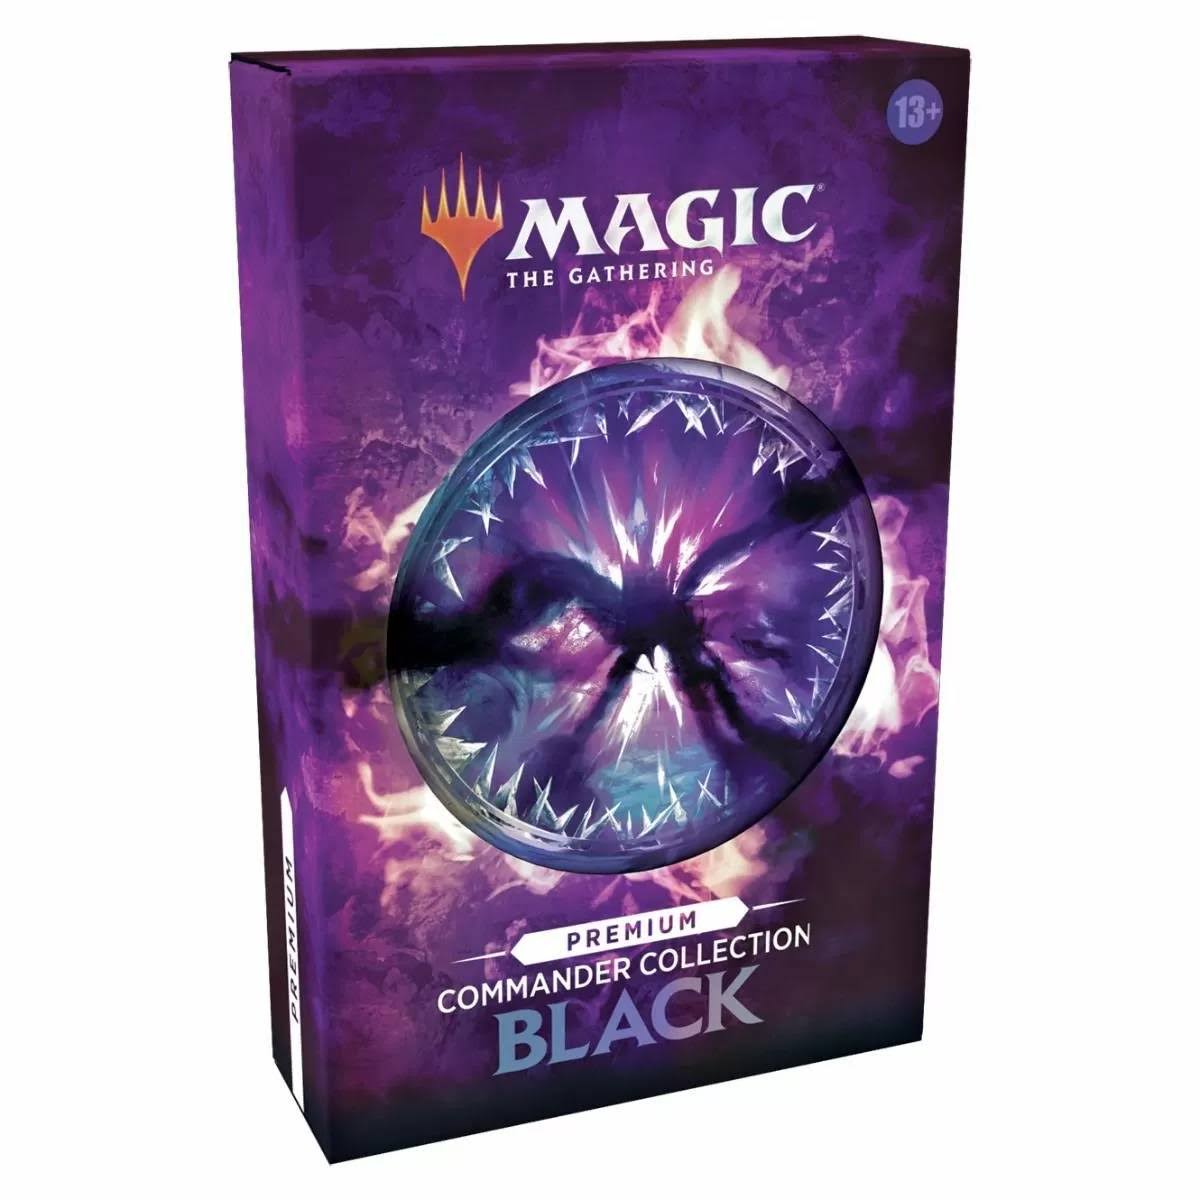 Magic: The Gathering Commander Collection Black Premium